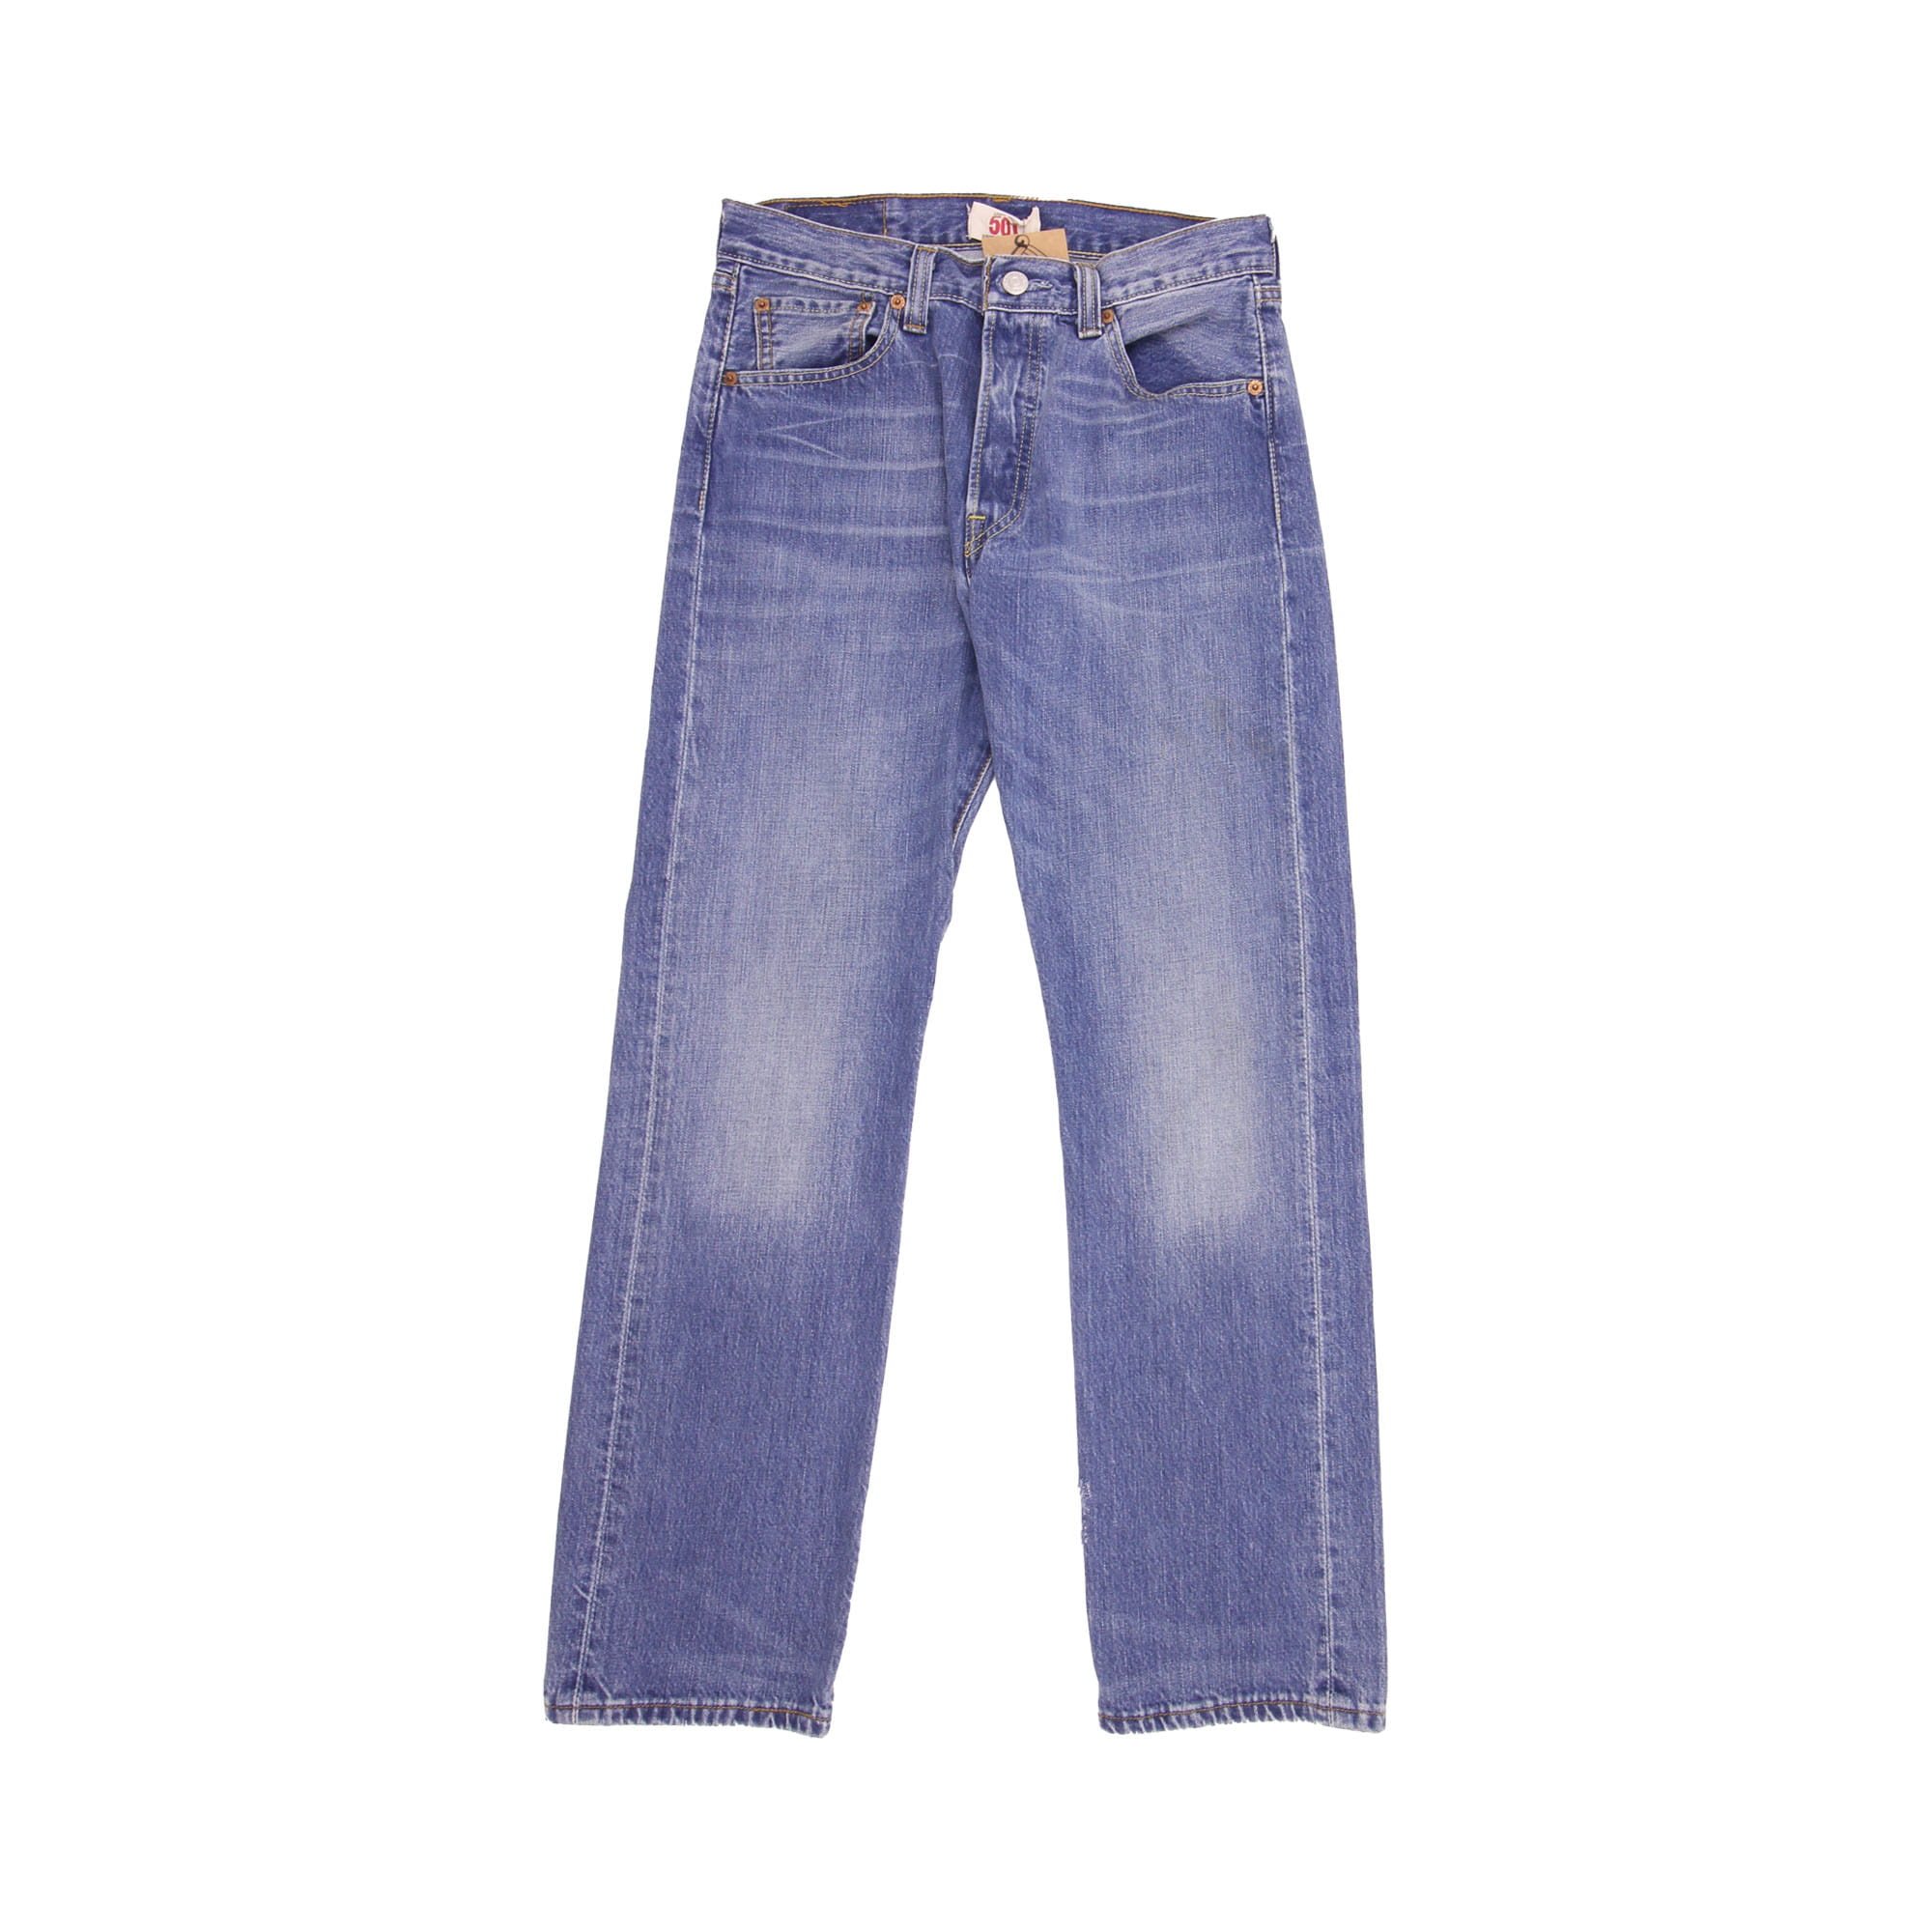 Levi's 501 Jeans -  W30 L30